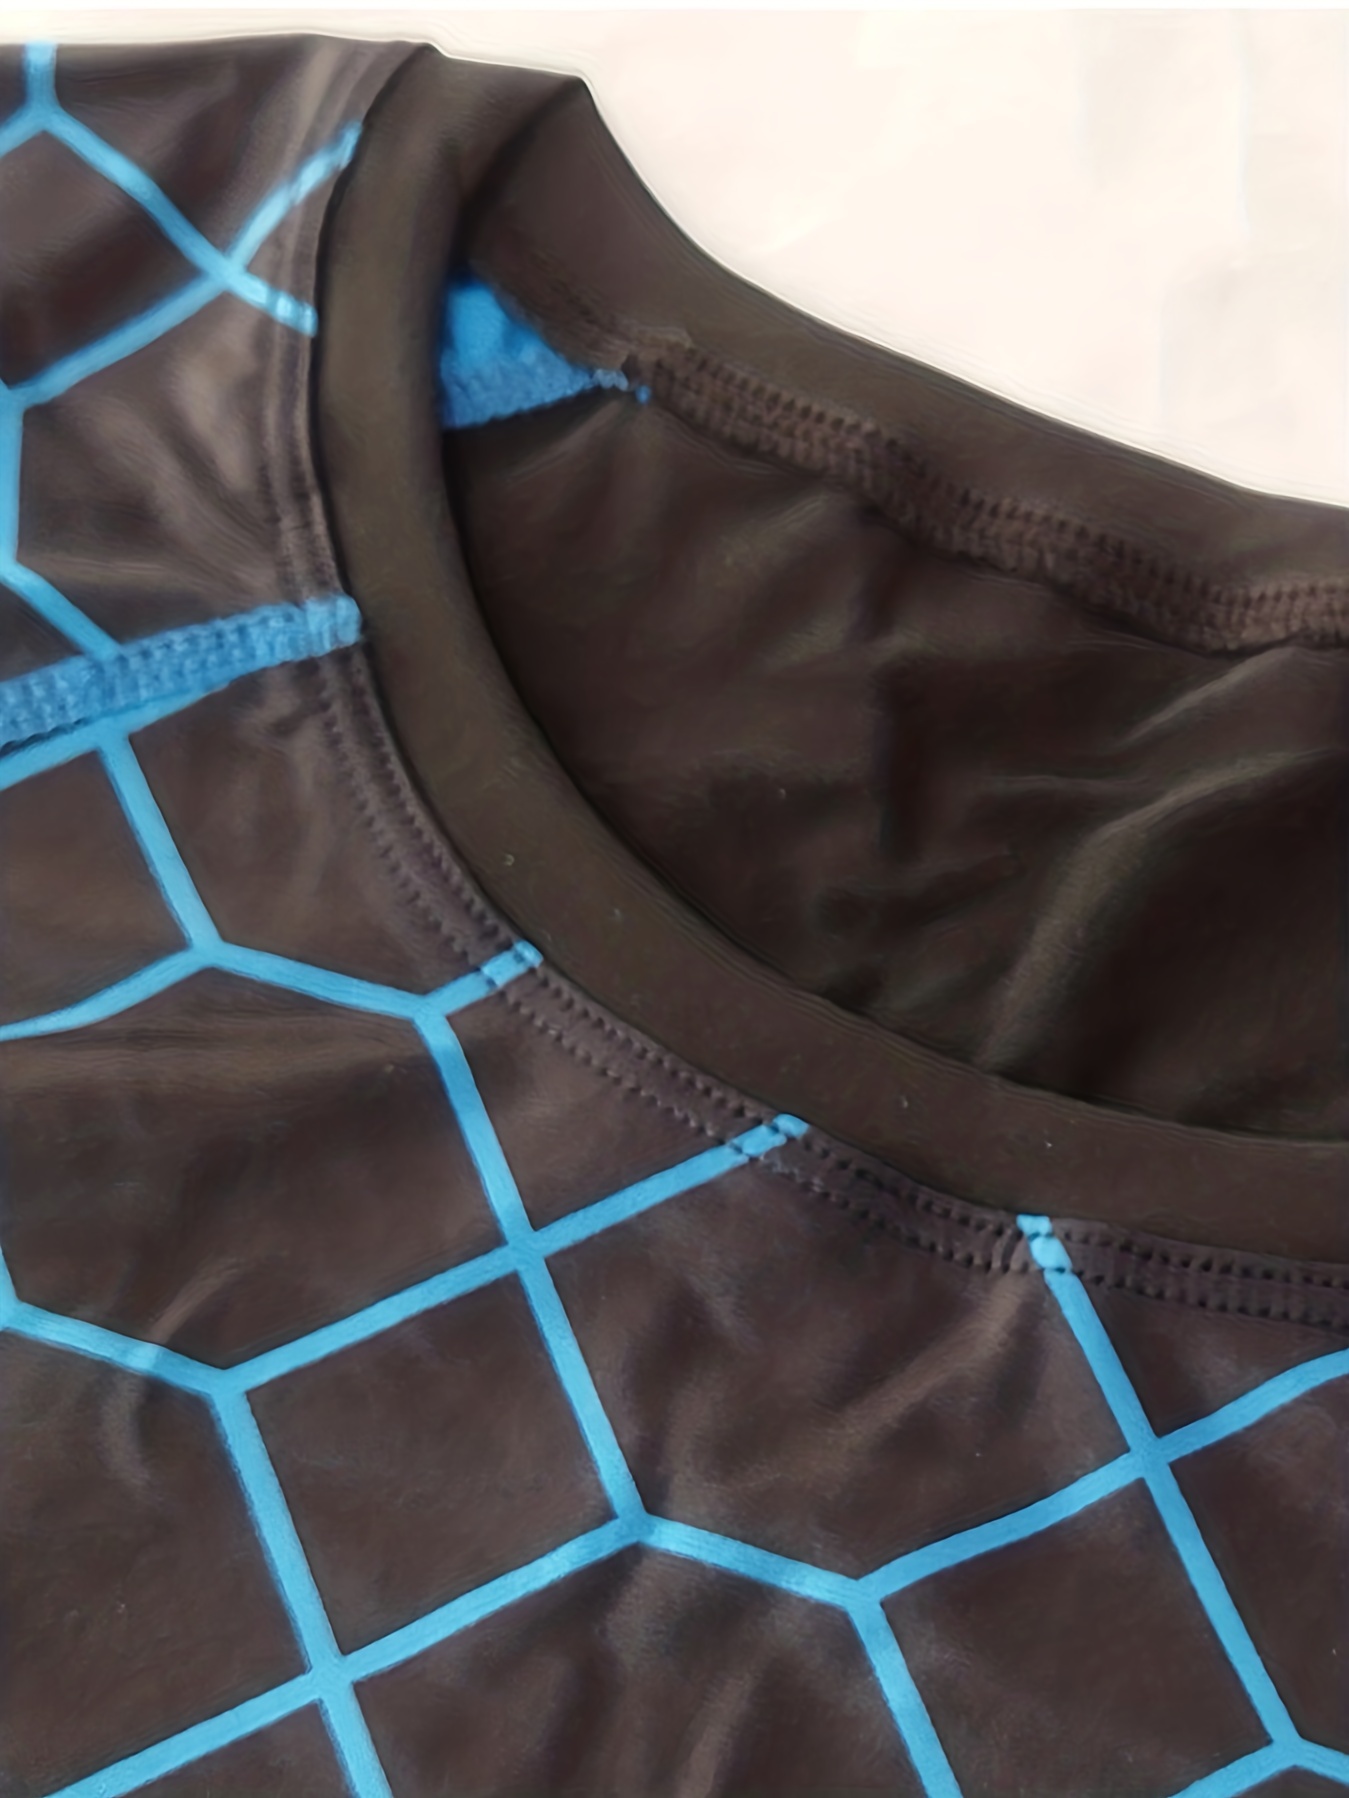 Men's Skin-Tight Garment Running Short Sleeved Sportswear Elastic